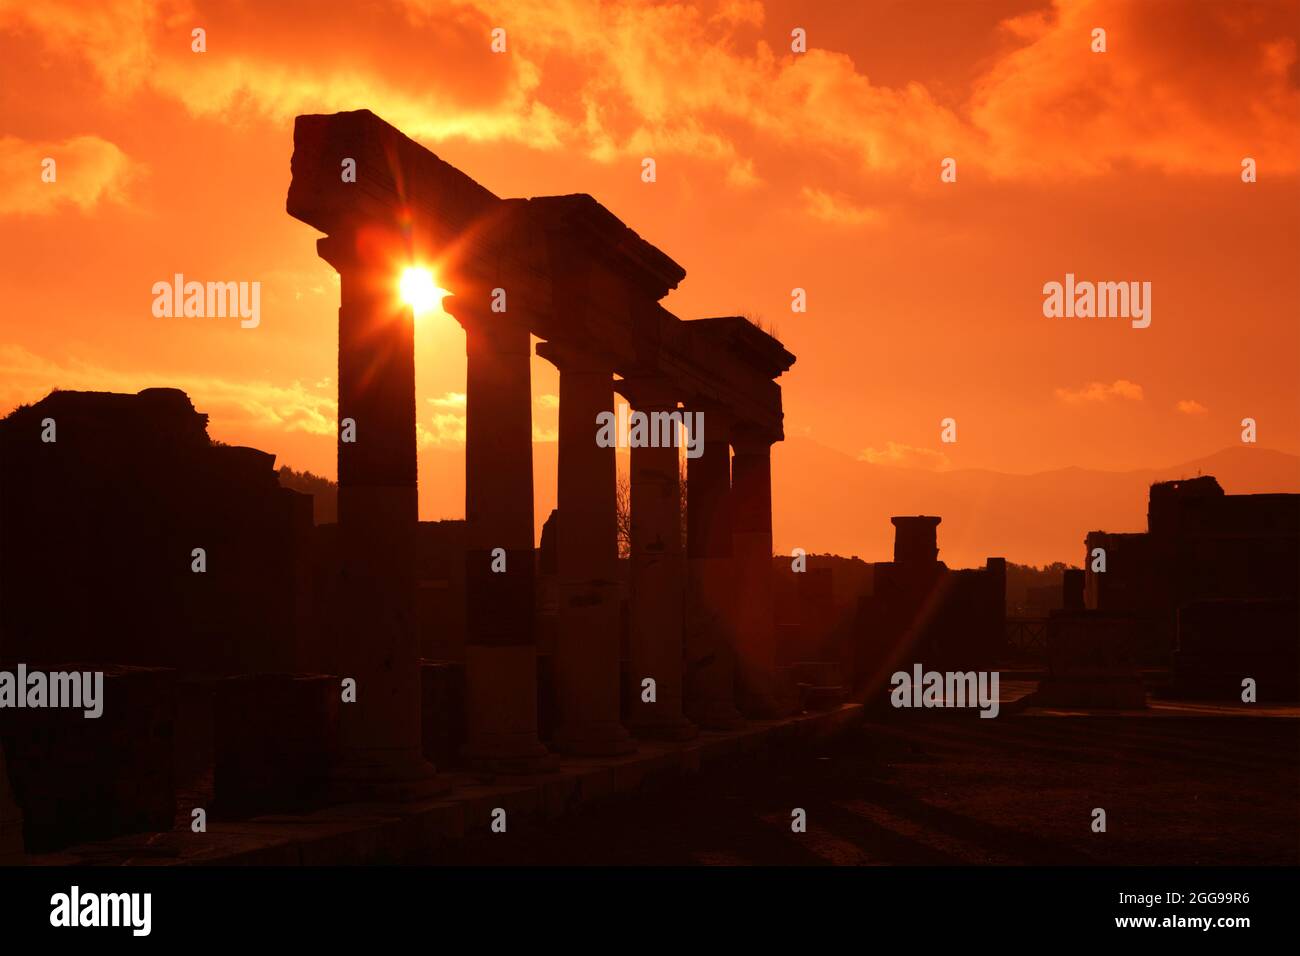 Columnas en el Foro de Pompeya, Nápoles, Italia Foto de stock